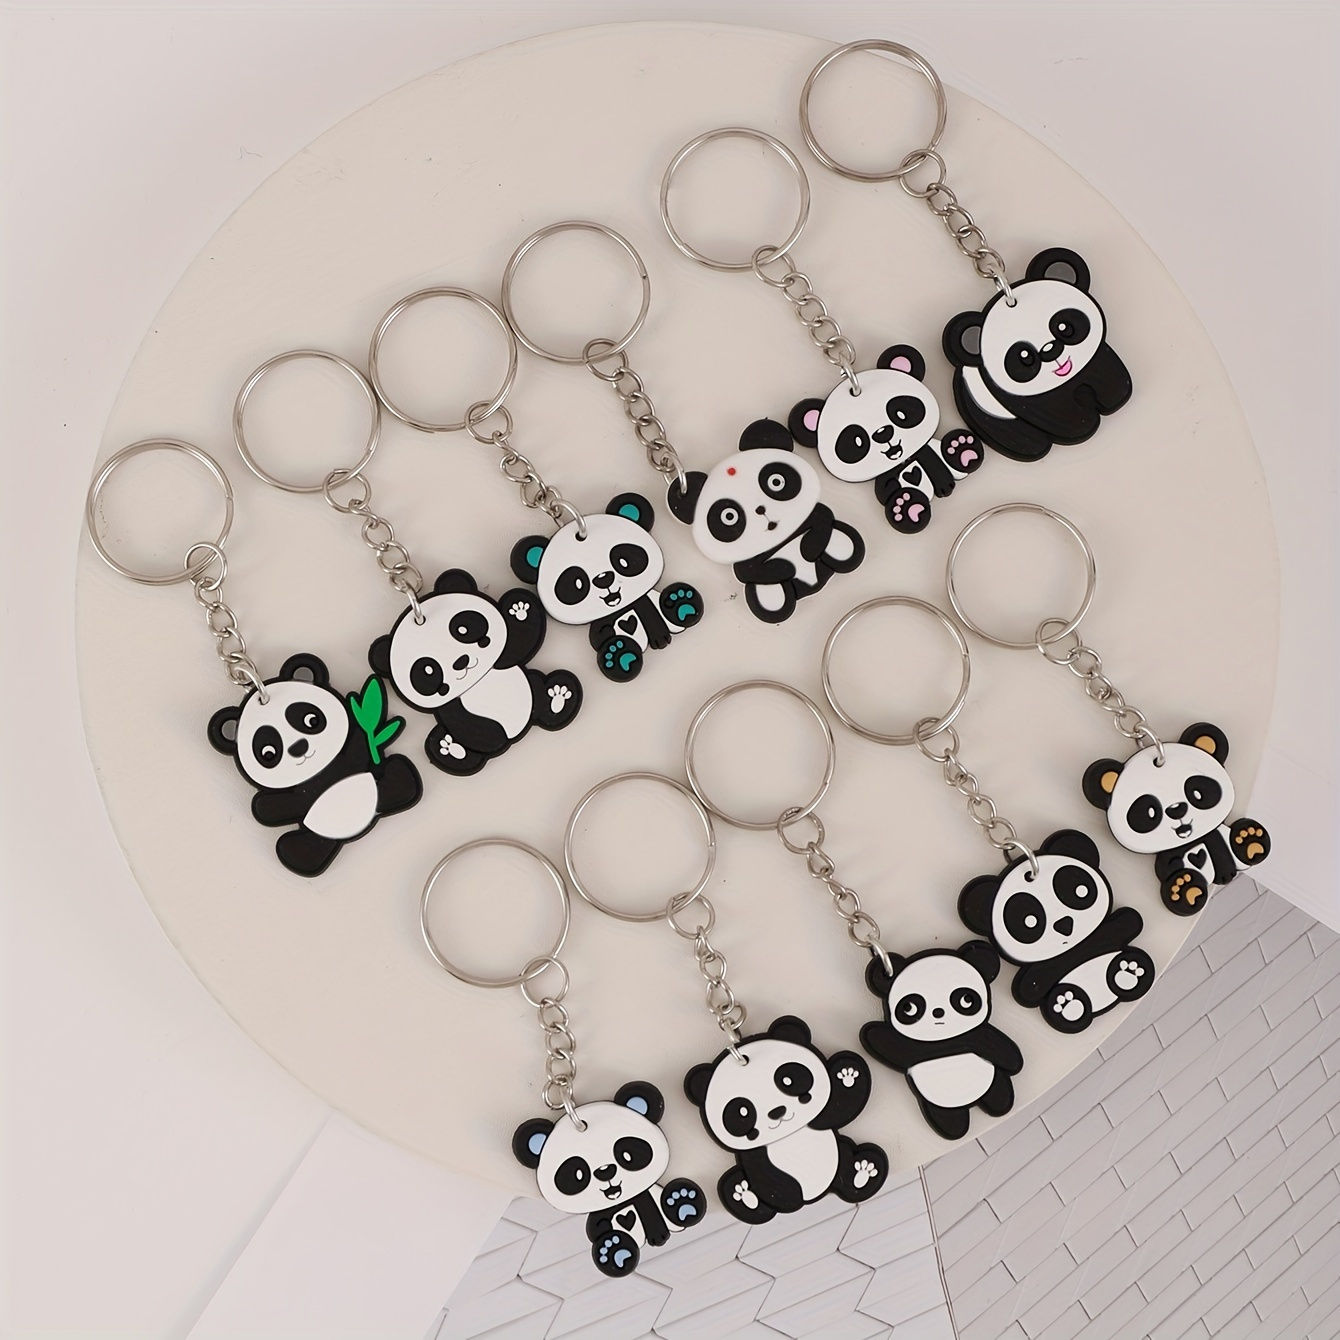 

11pcs Cartoon Panda Keychain Cute Animal Pvc Key Chain Ring Bag Backpack Charm Birthday Party Decor Women Daily Use Gift